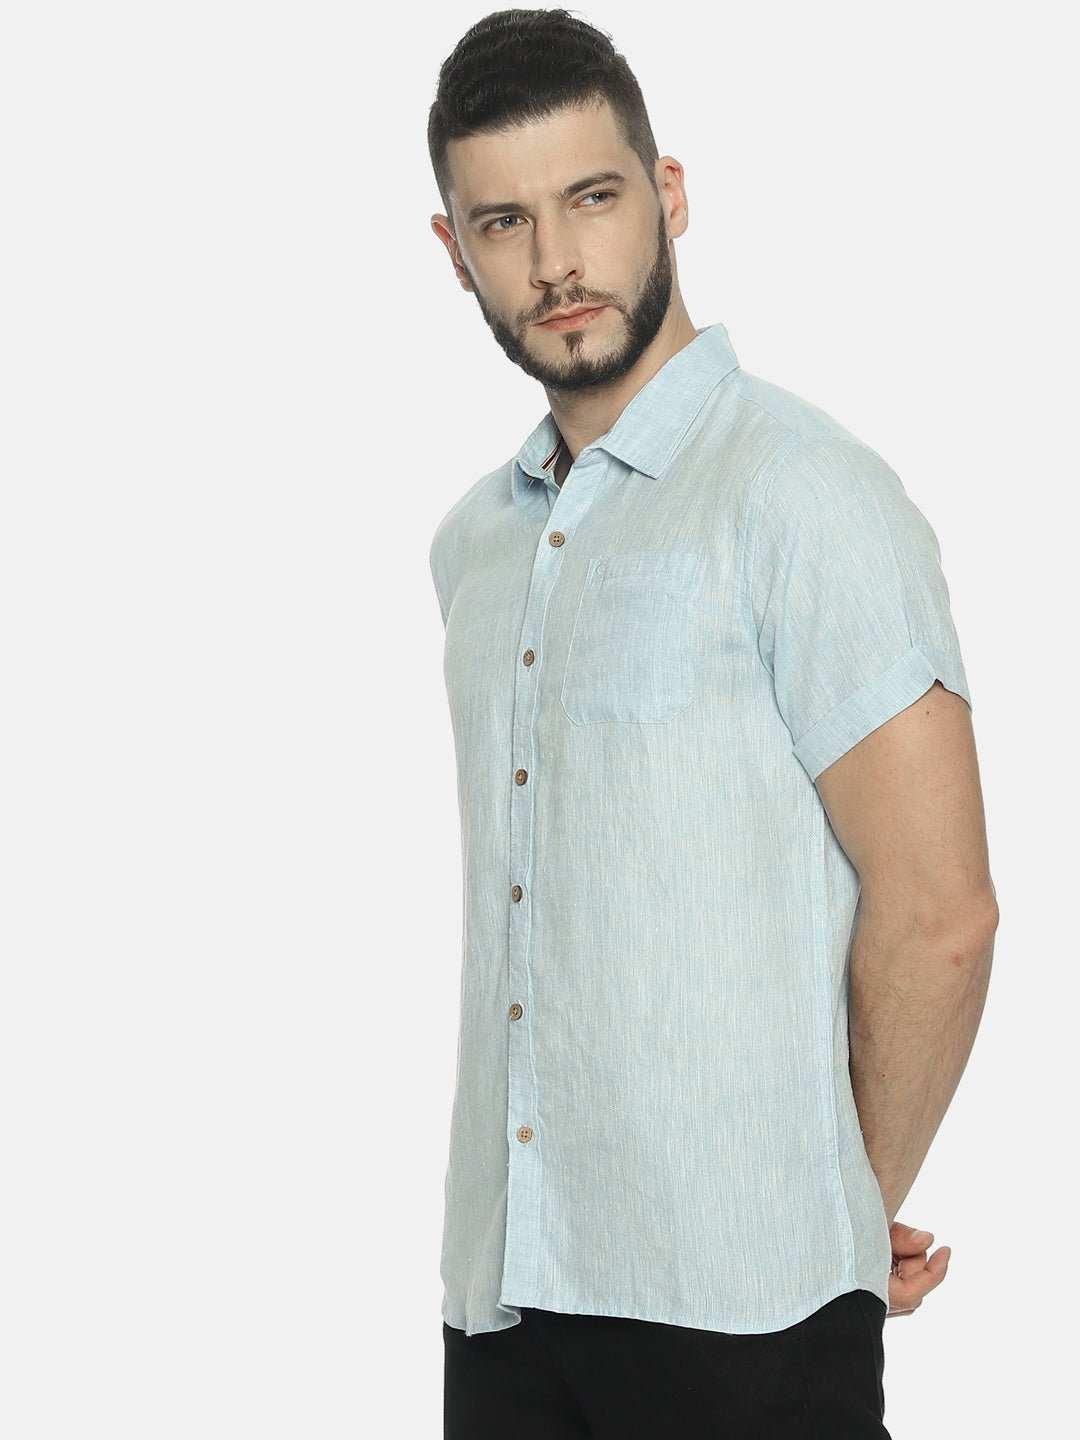 Ecentric Sky Blue Colour Slim Fit Hemp Casual Shirt - CBD Store India